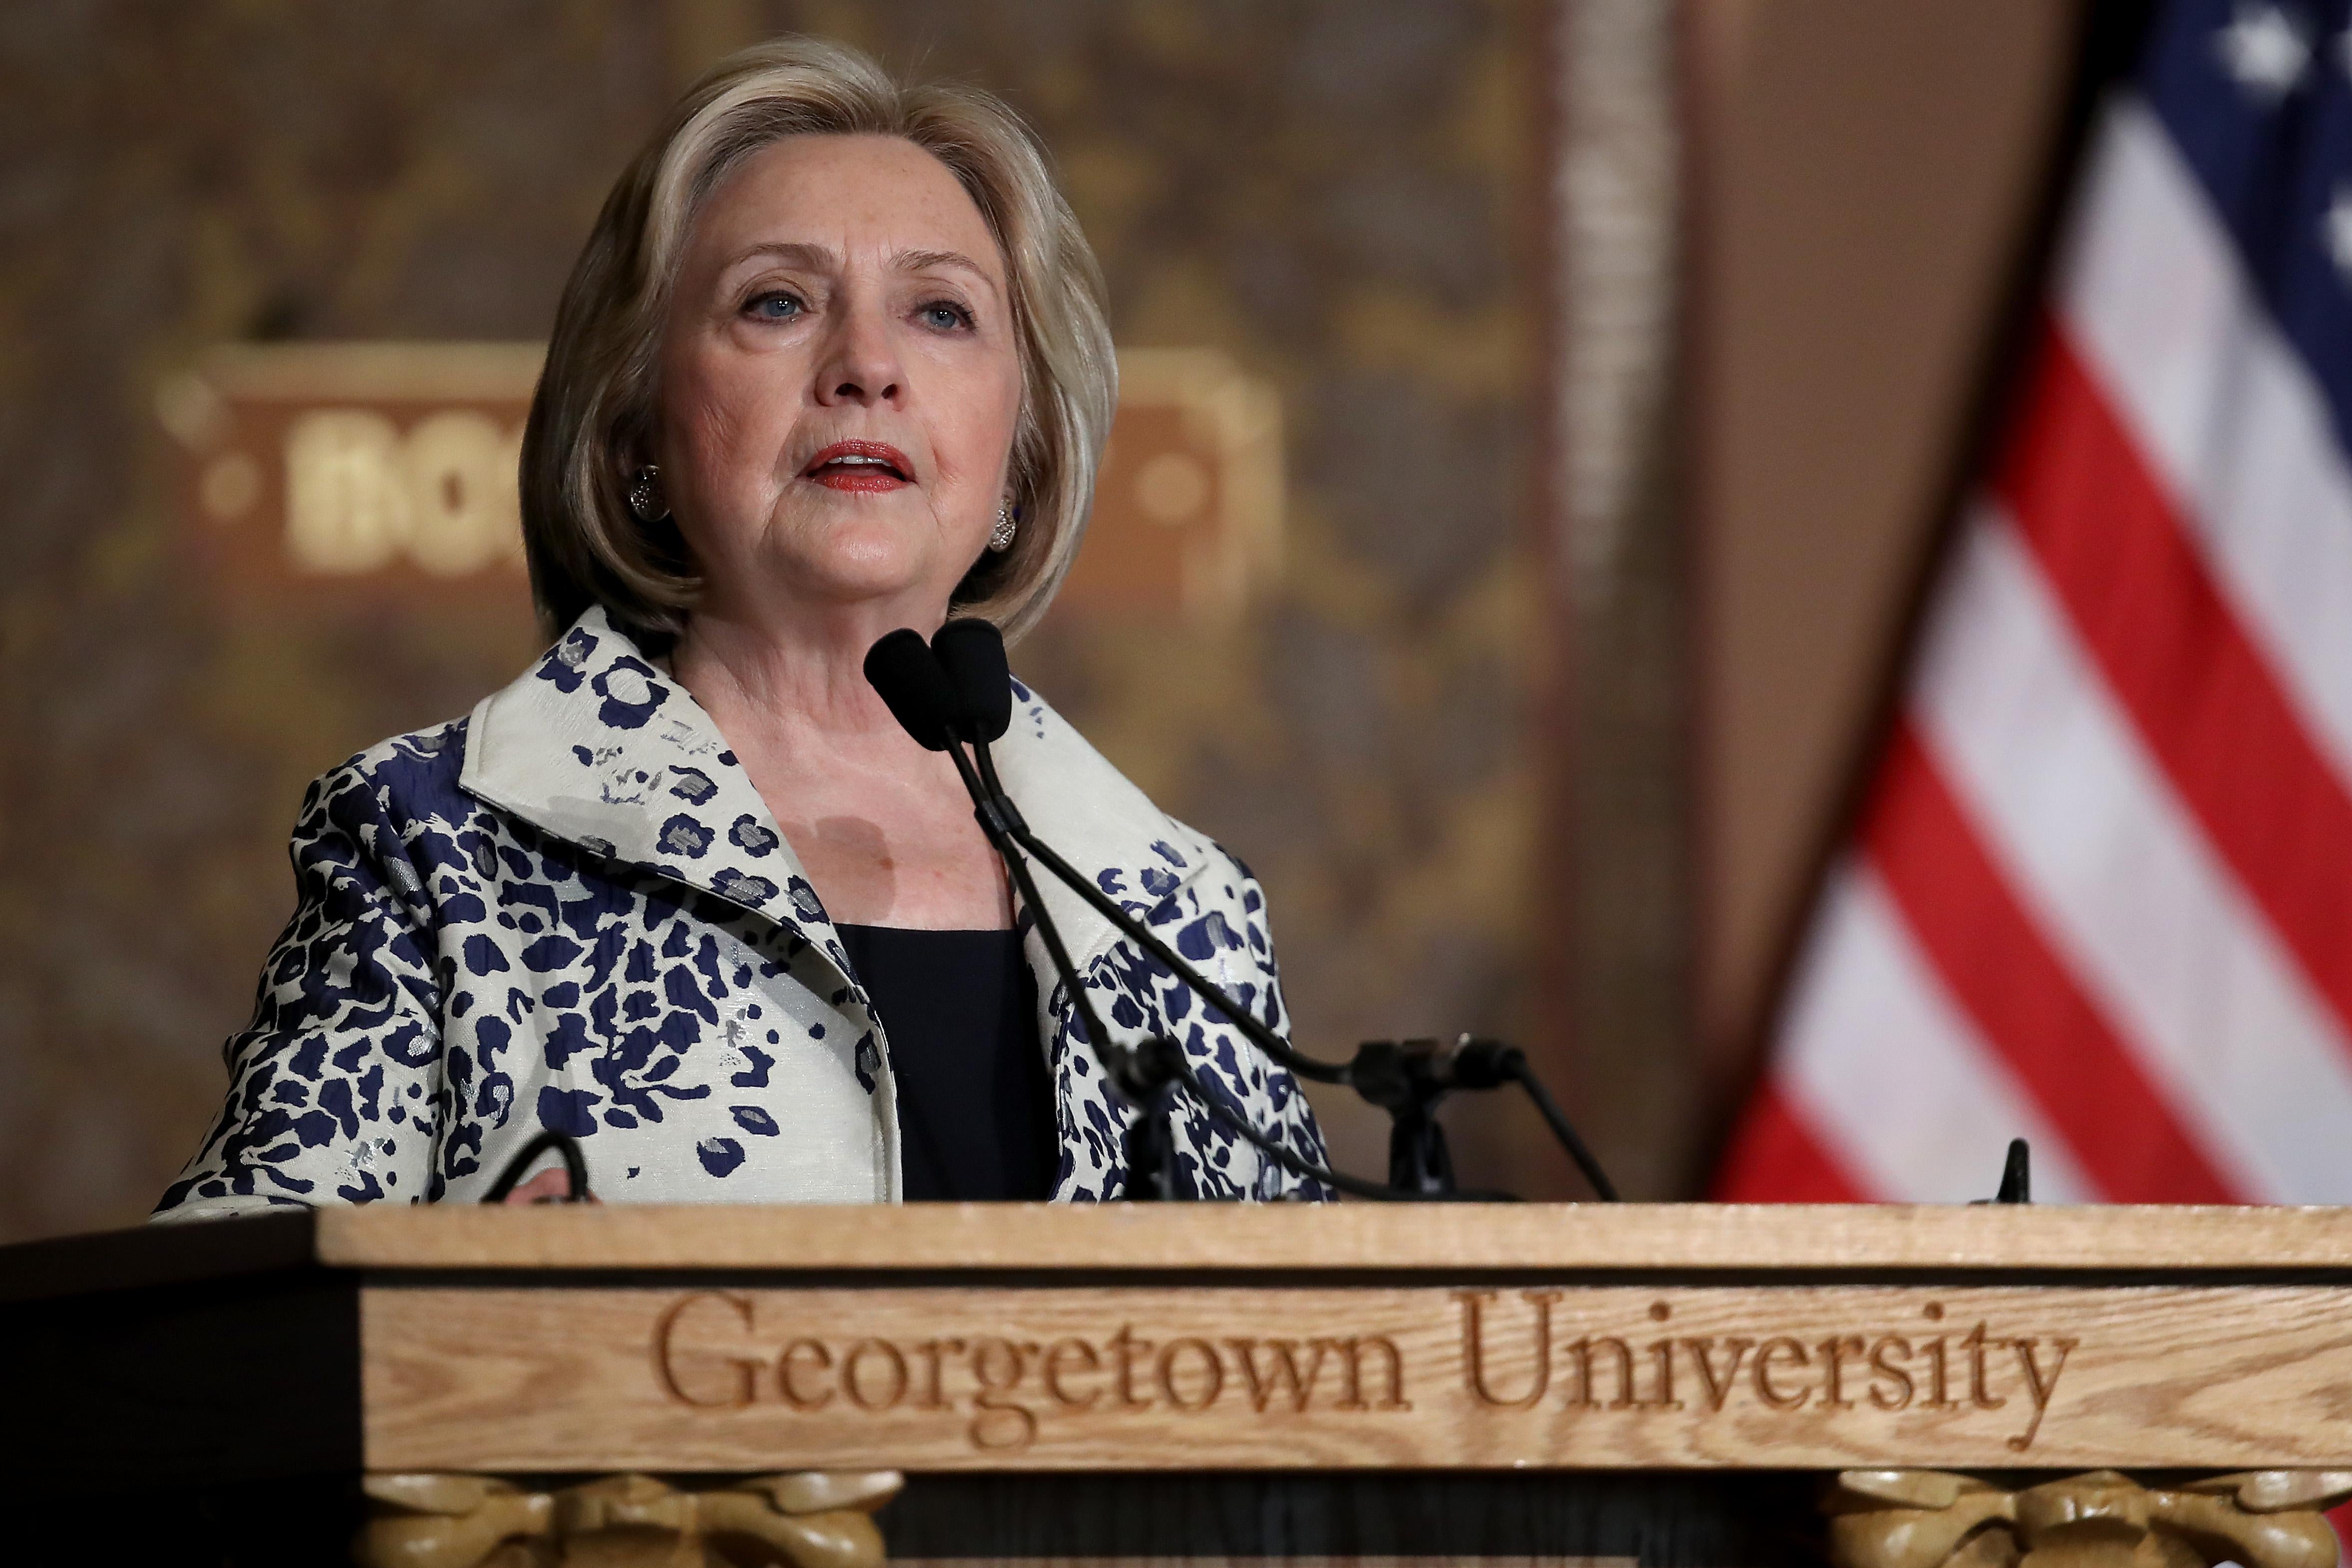 Former Secretary of State Hillary Clinton speaks at Georgetown University September 27, 2019 in Washington, D.C.